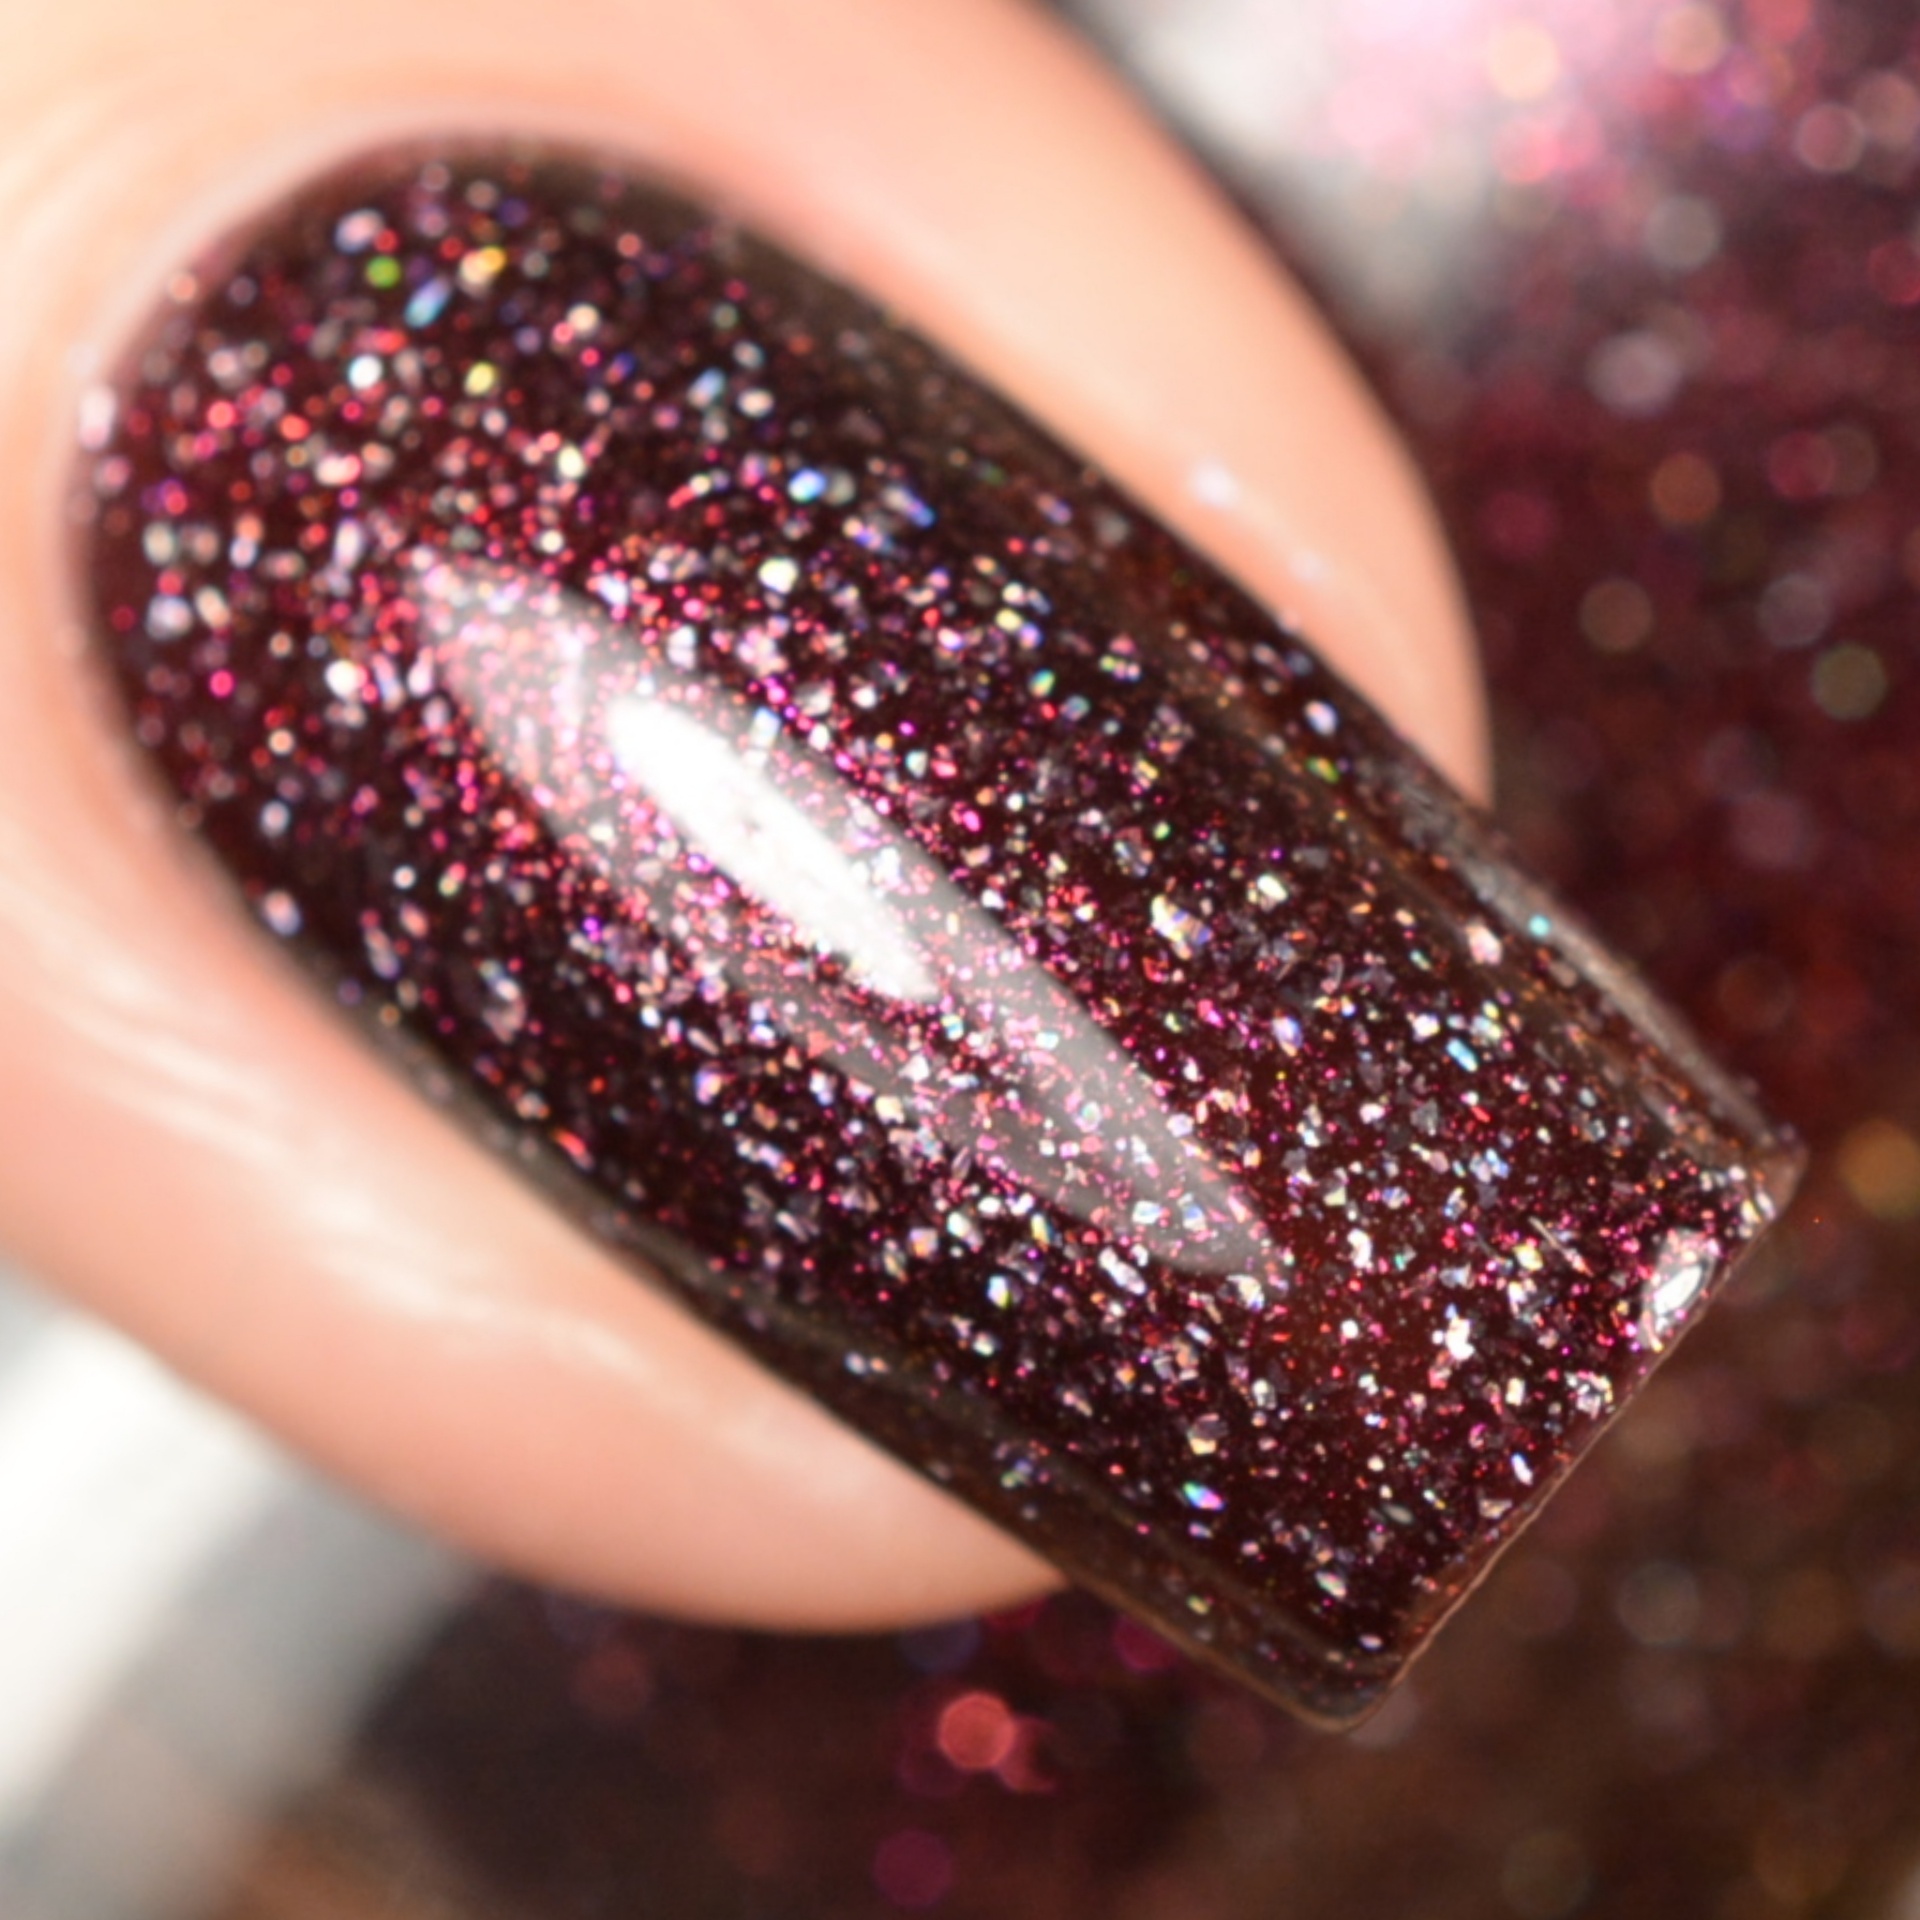 carry on - dark burgundy nail polish & nail color - essie